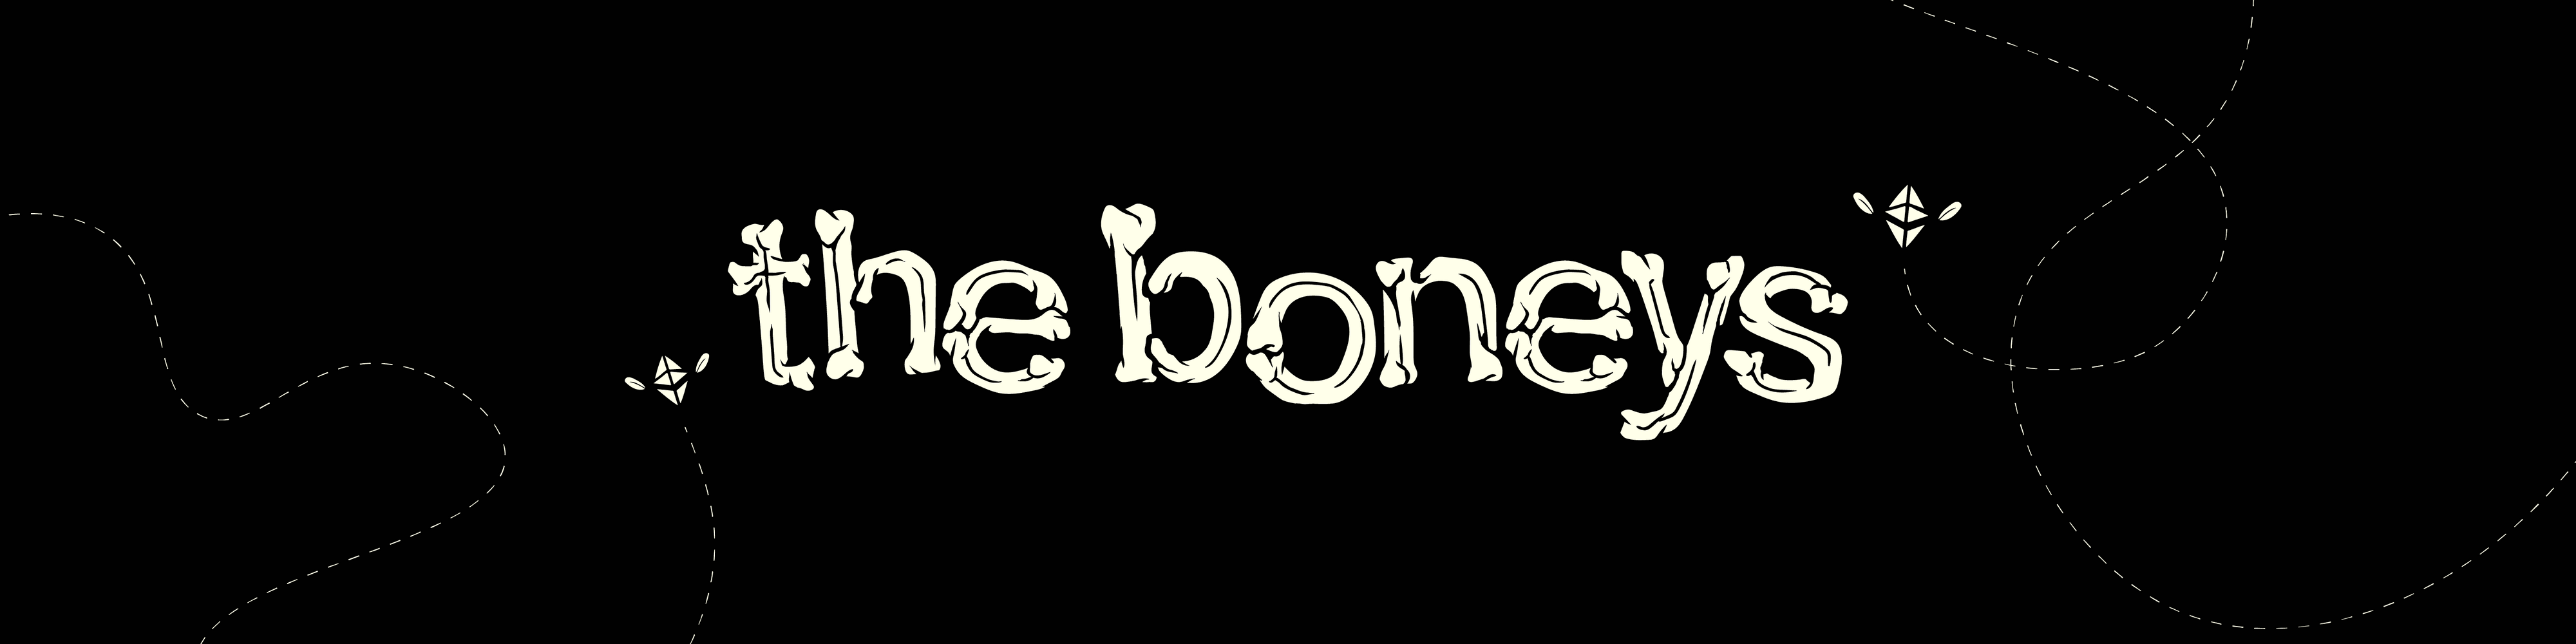 The Boneys